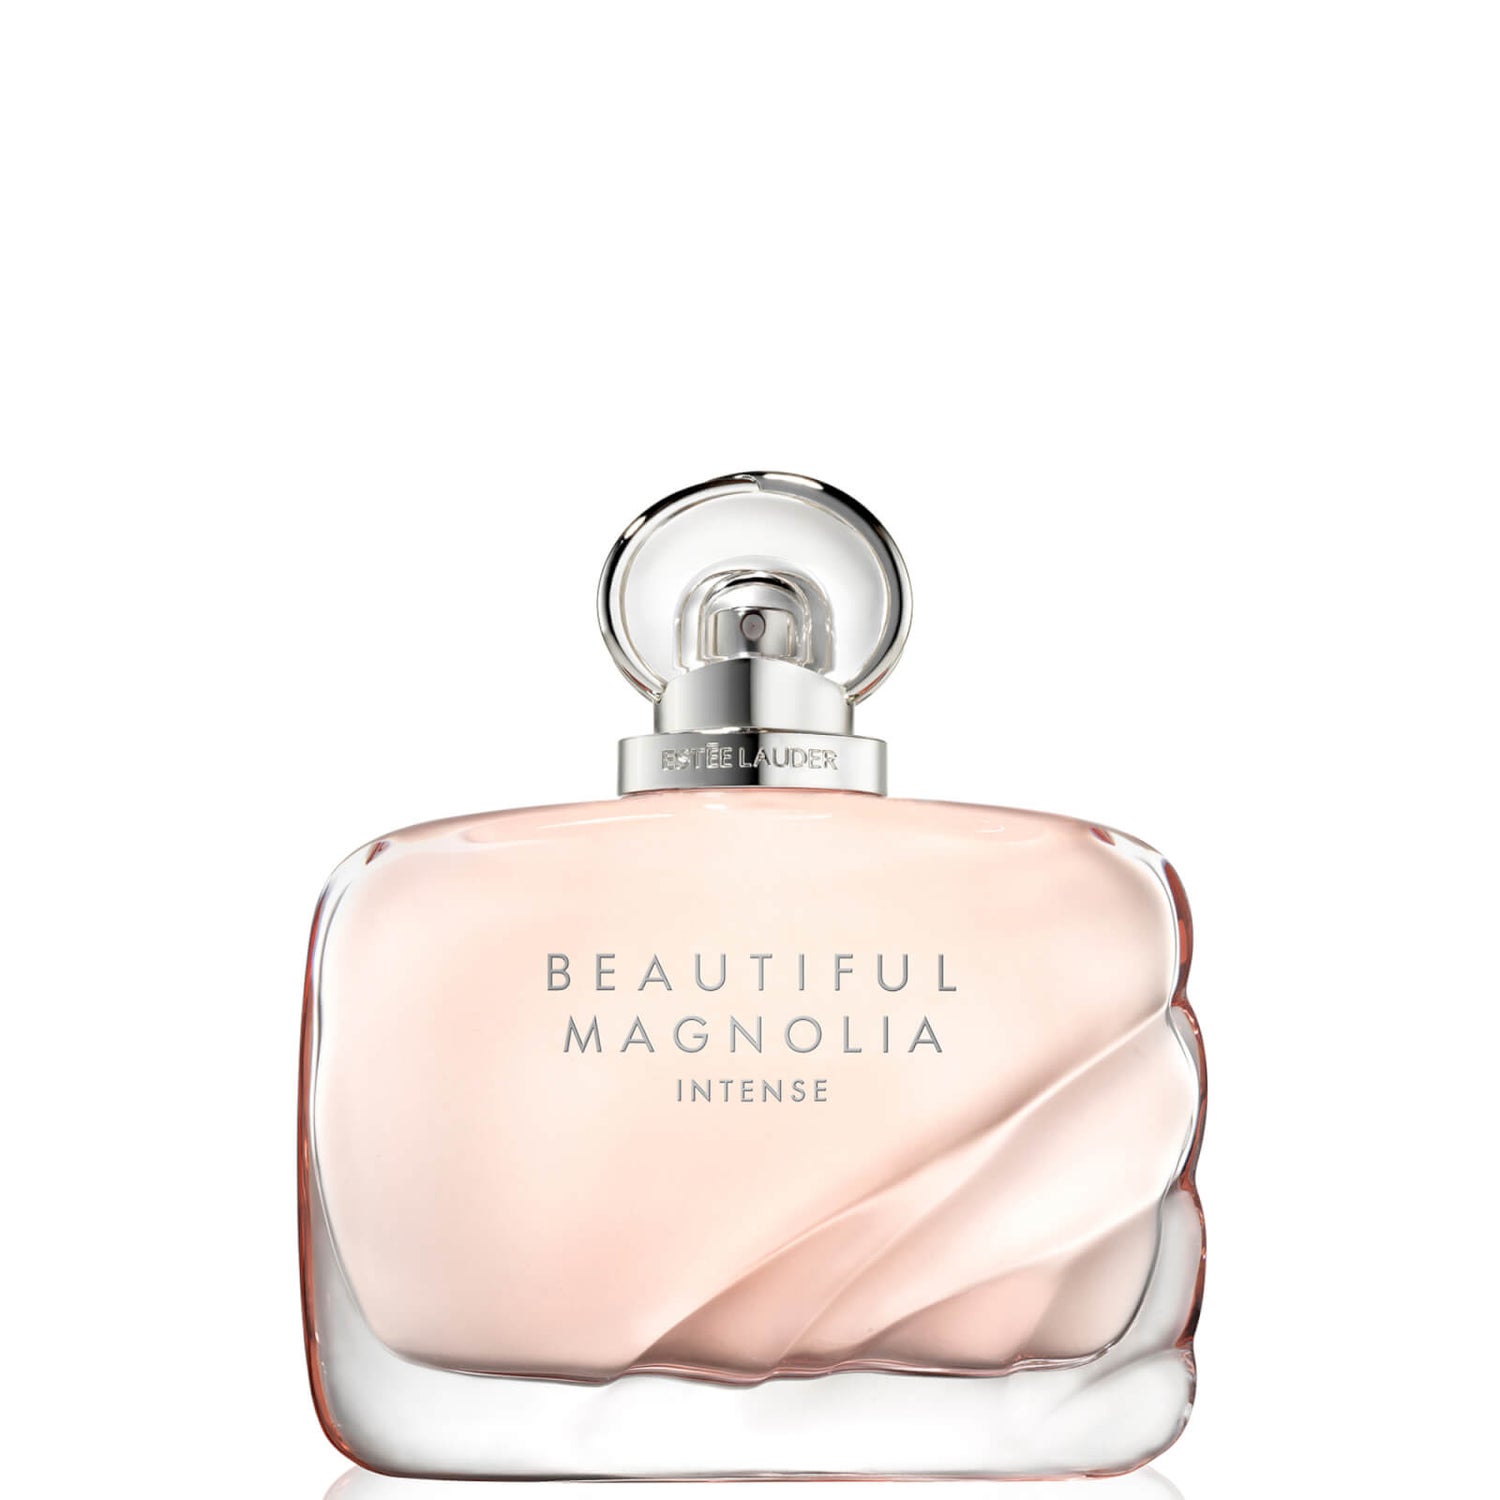 Lauder Beautiful Magnolia Intense Eau de Parfum 100ml - Dermstore